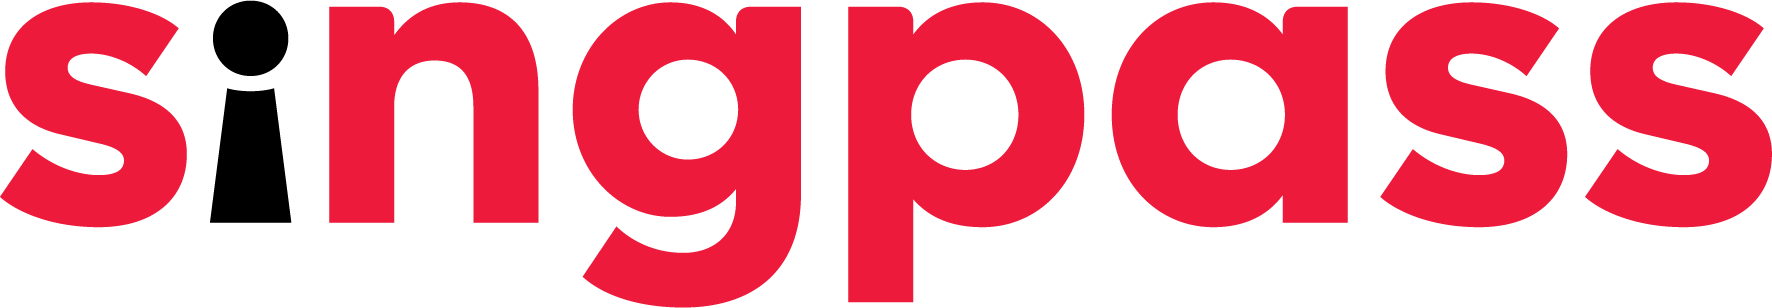 The Singpass logo